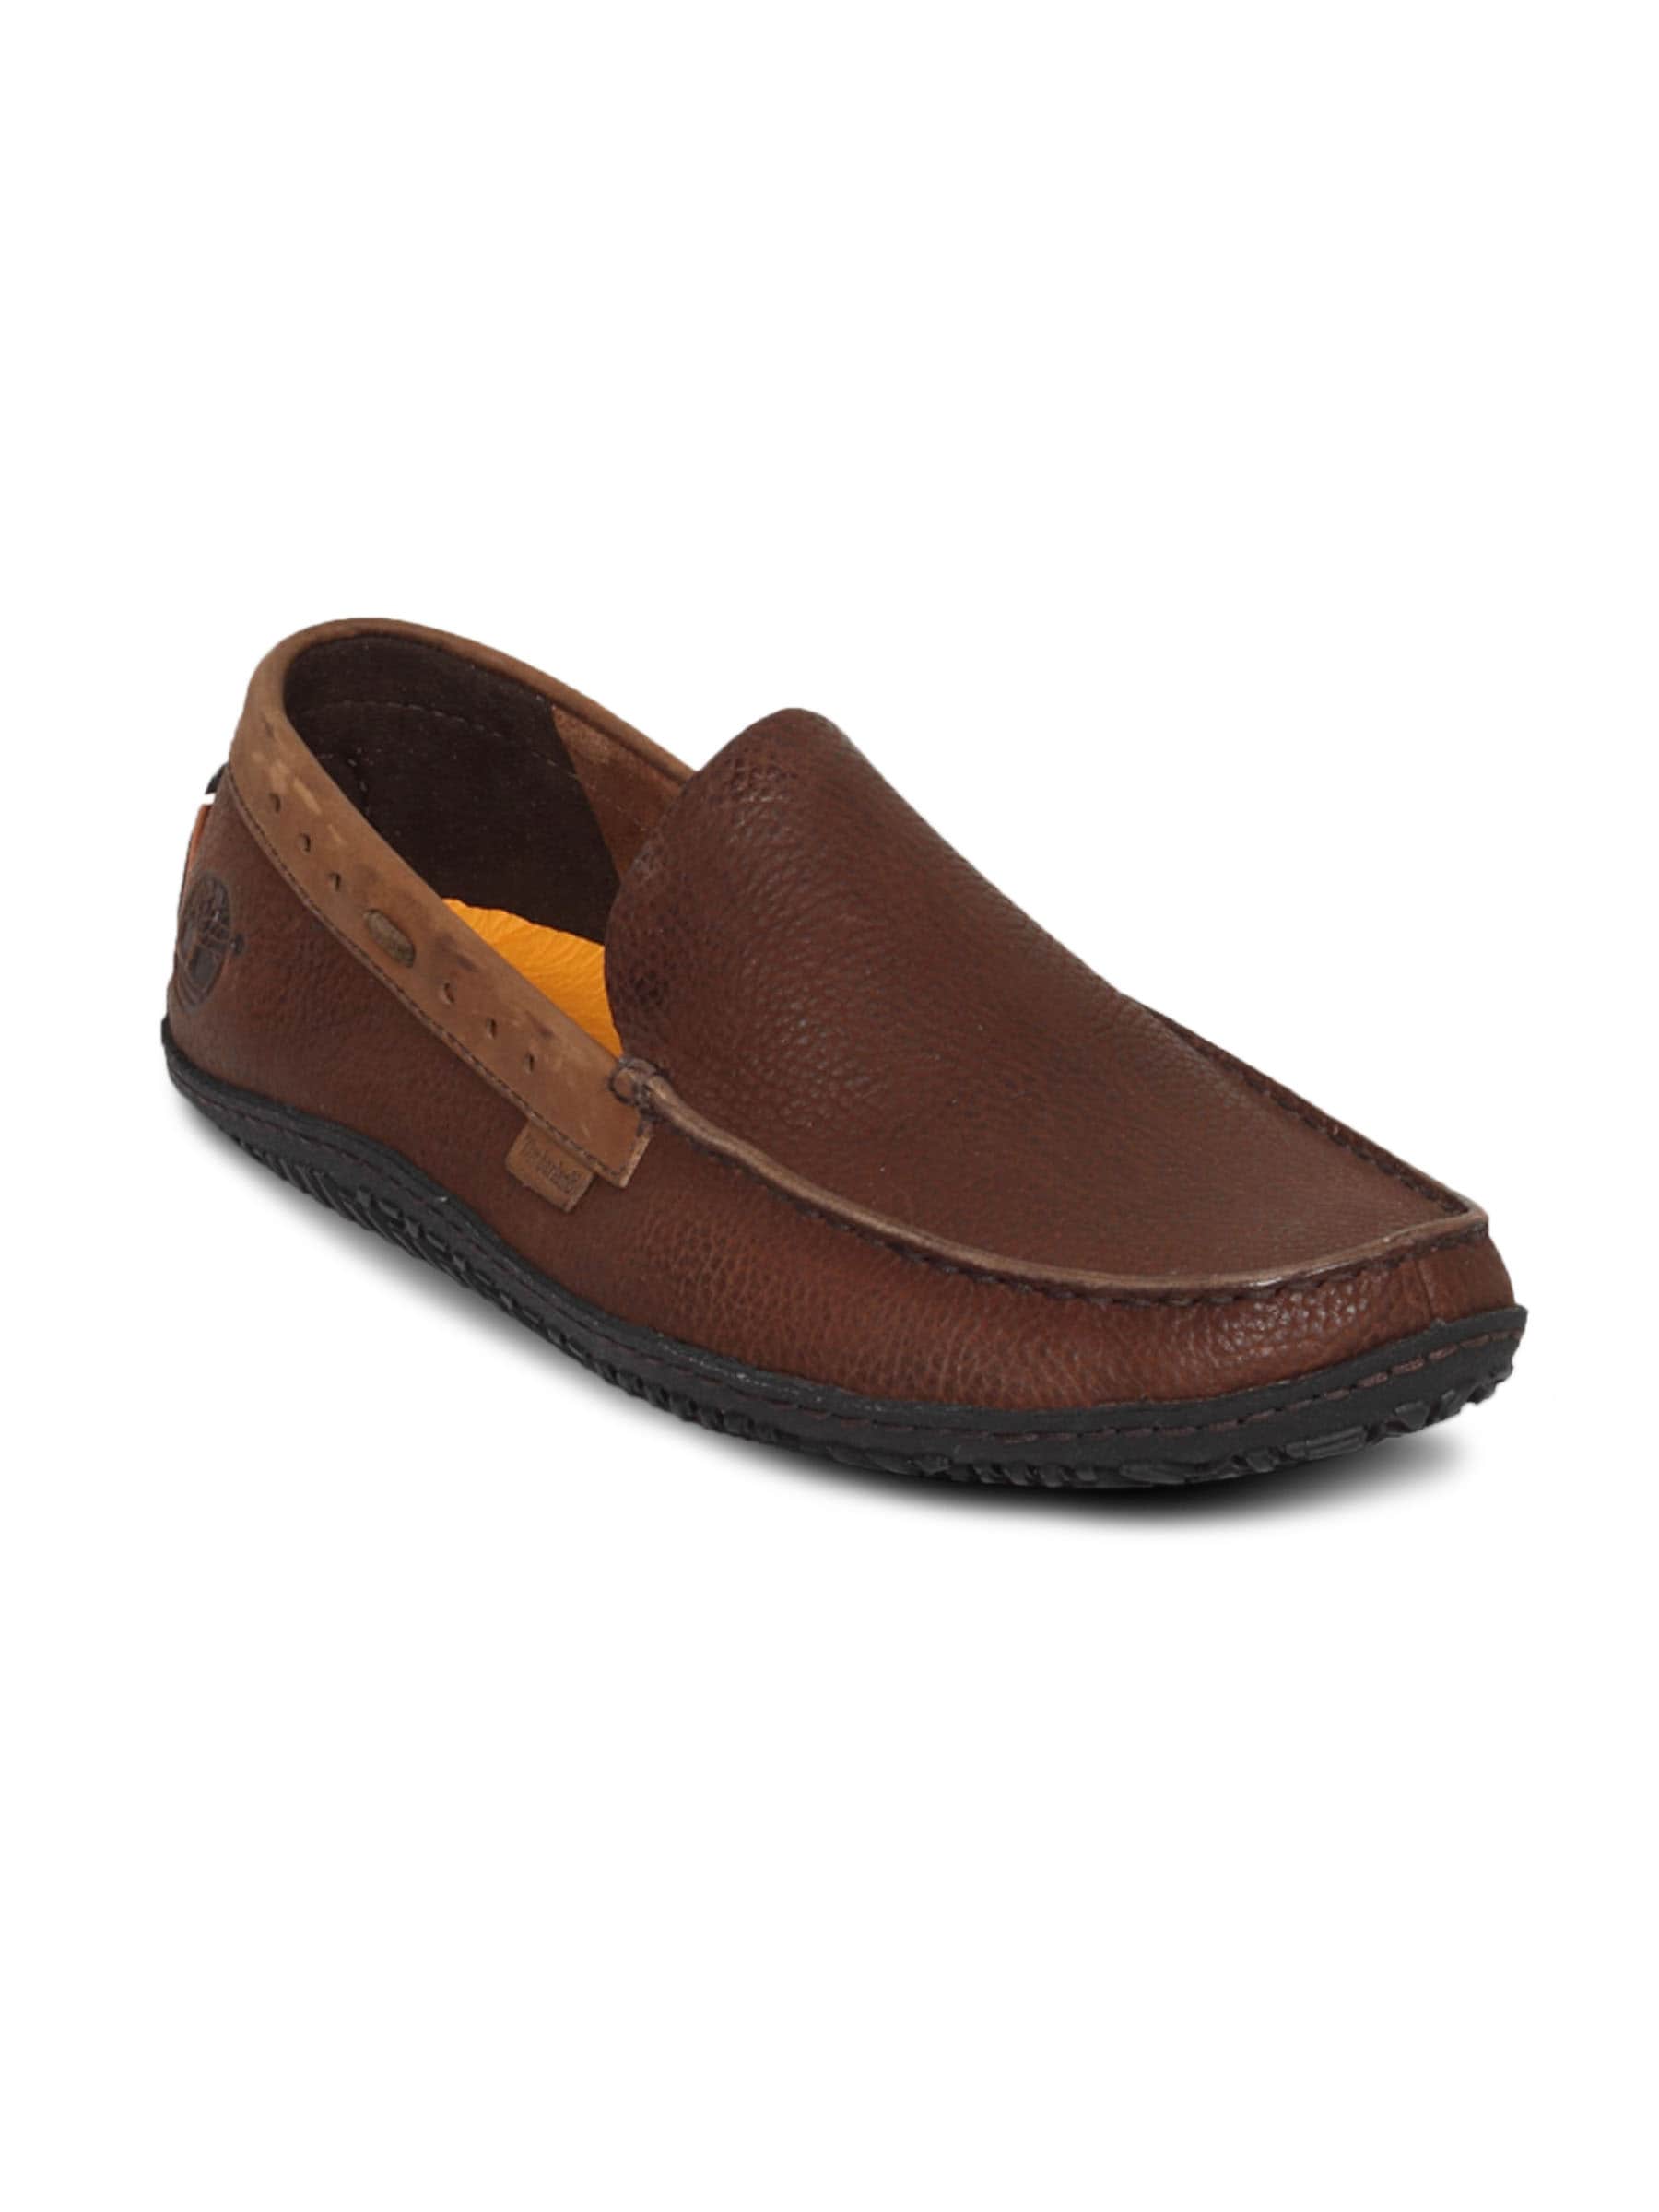 Timberland Men's Cityendur Brown Shoe